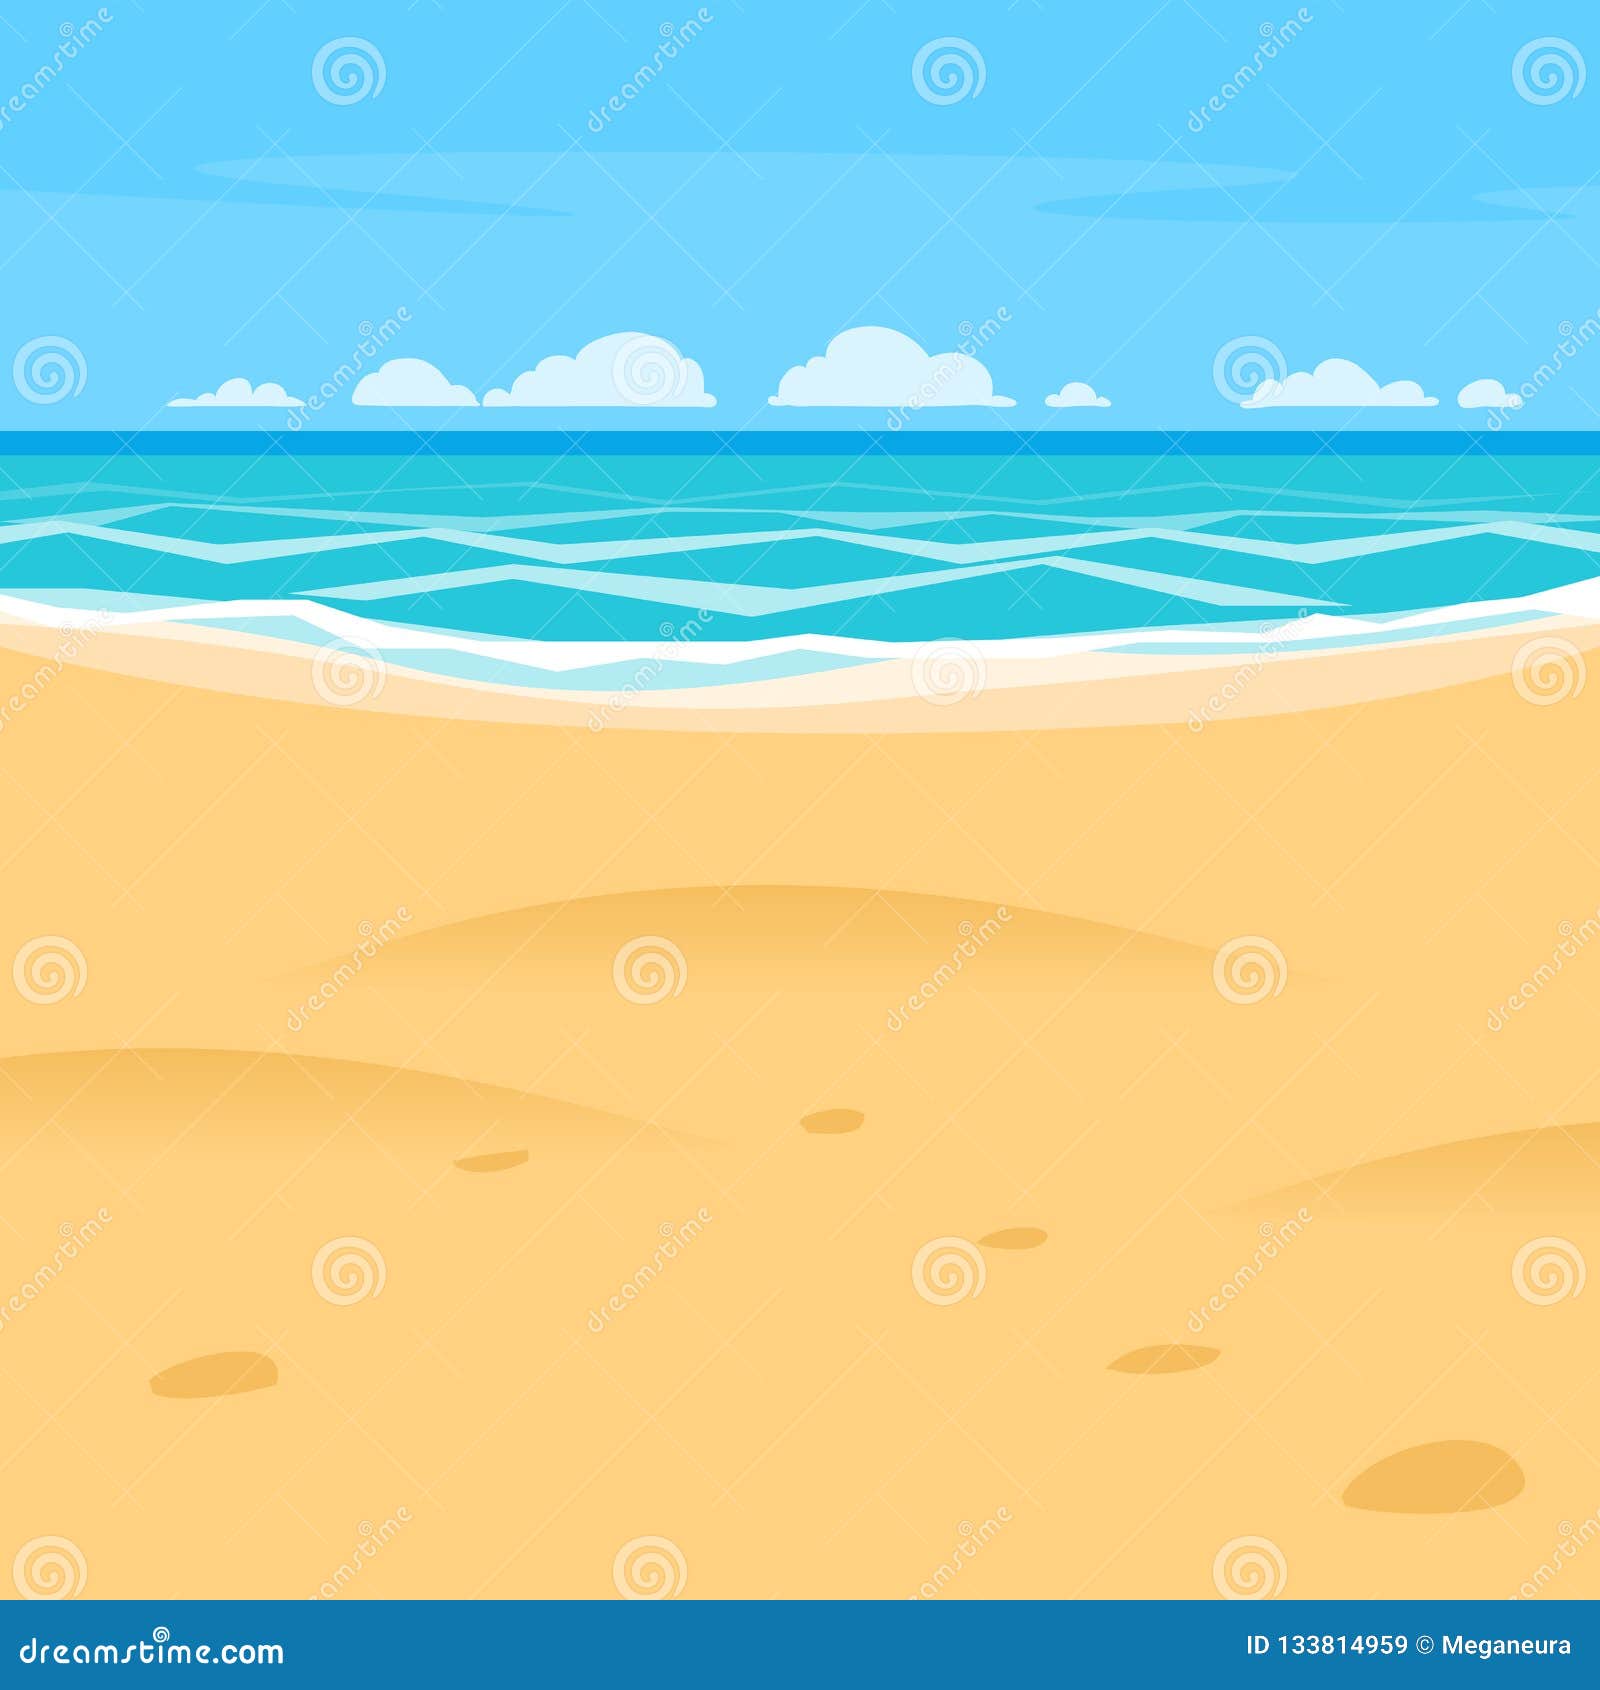 sand beach simple cartoon style background. sea shore view